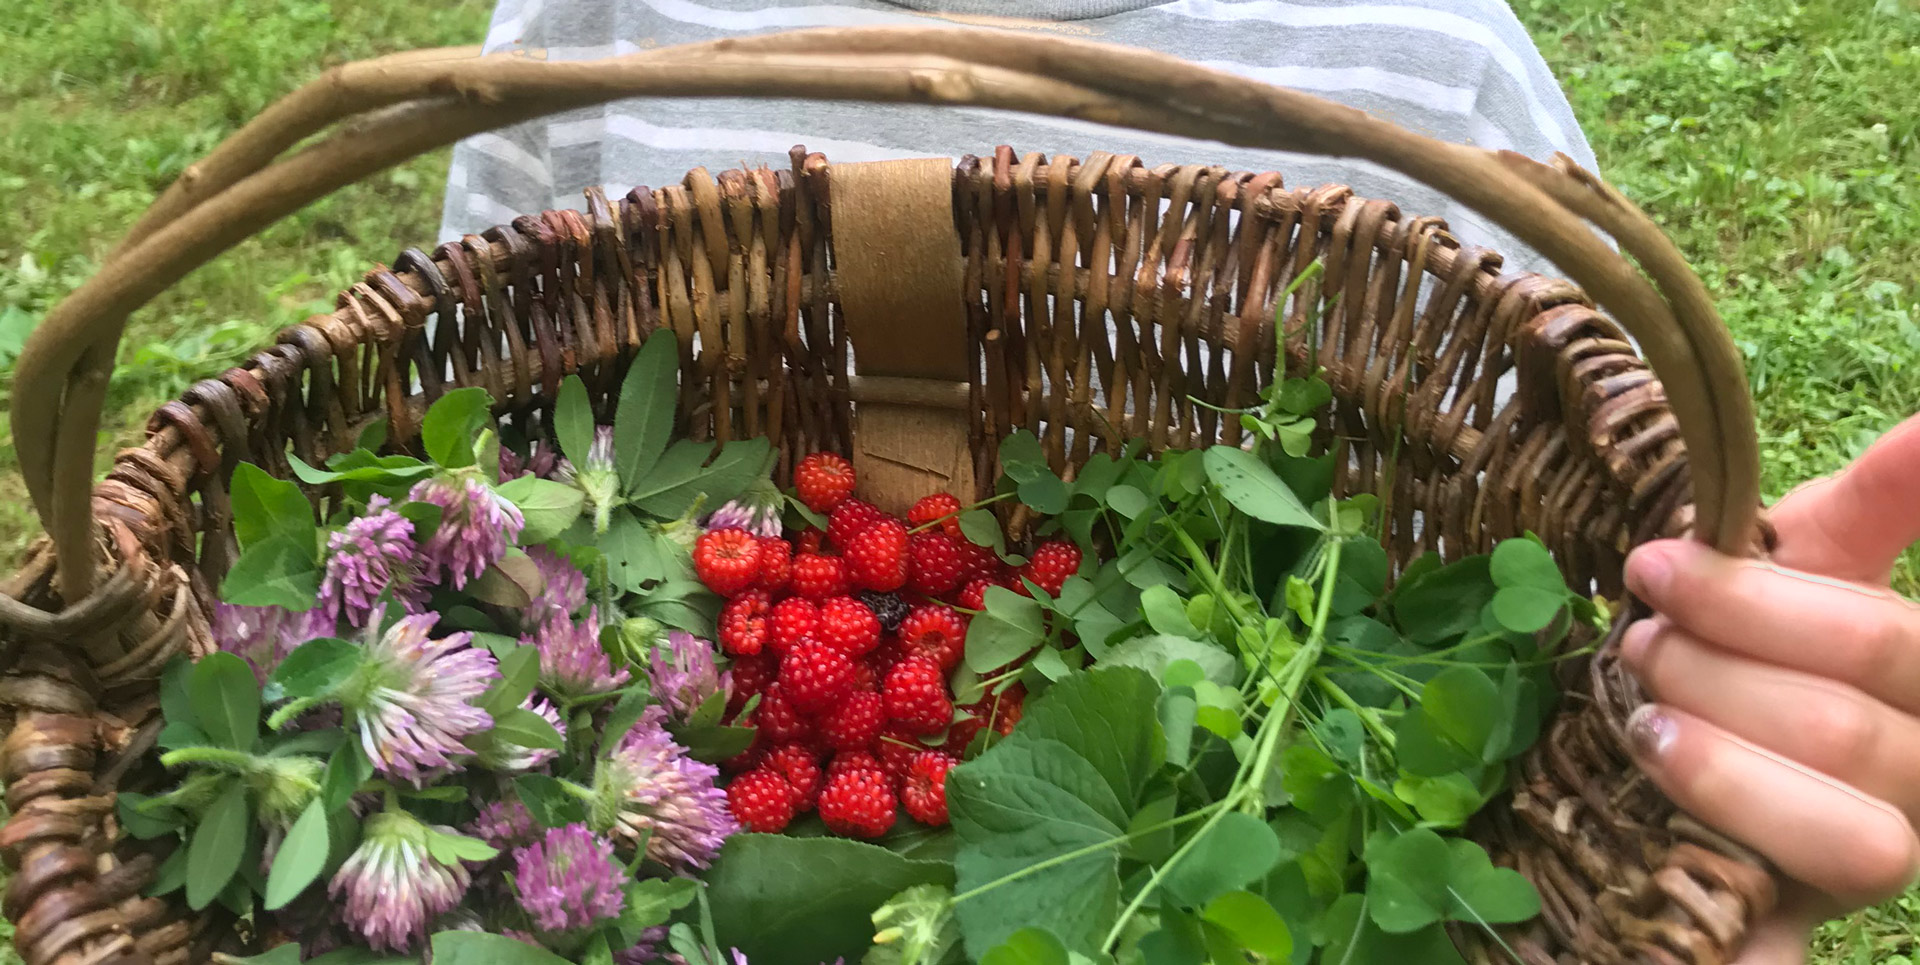 Closeup of handmade basket from natural materials full of wild edibles gathered at nature camp